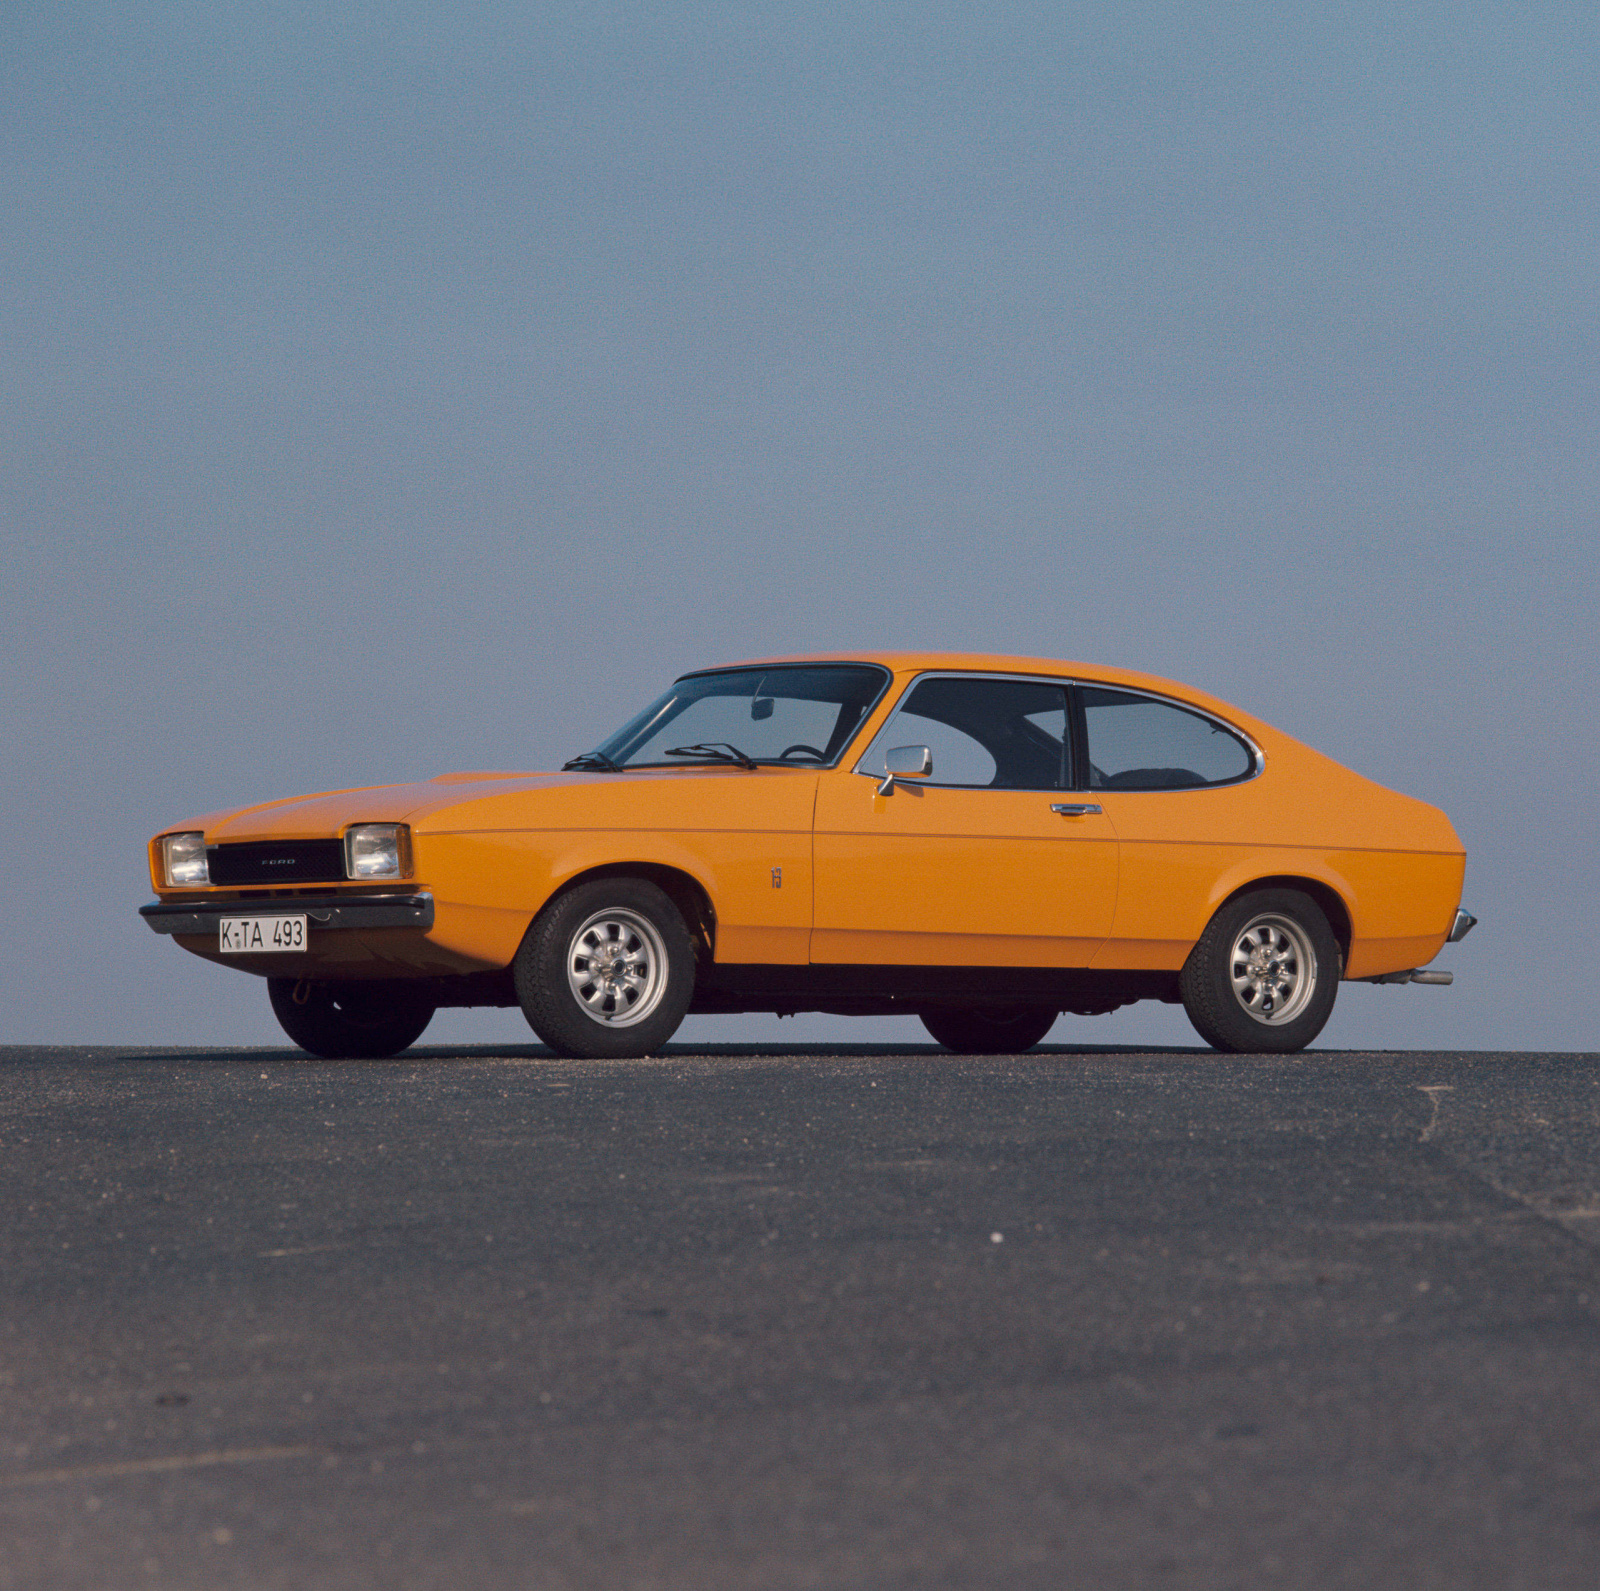 Ford Capri (1976) - Foto eines Ford PKW-Modells